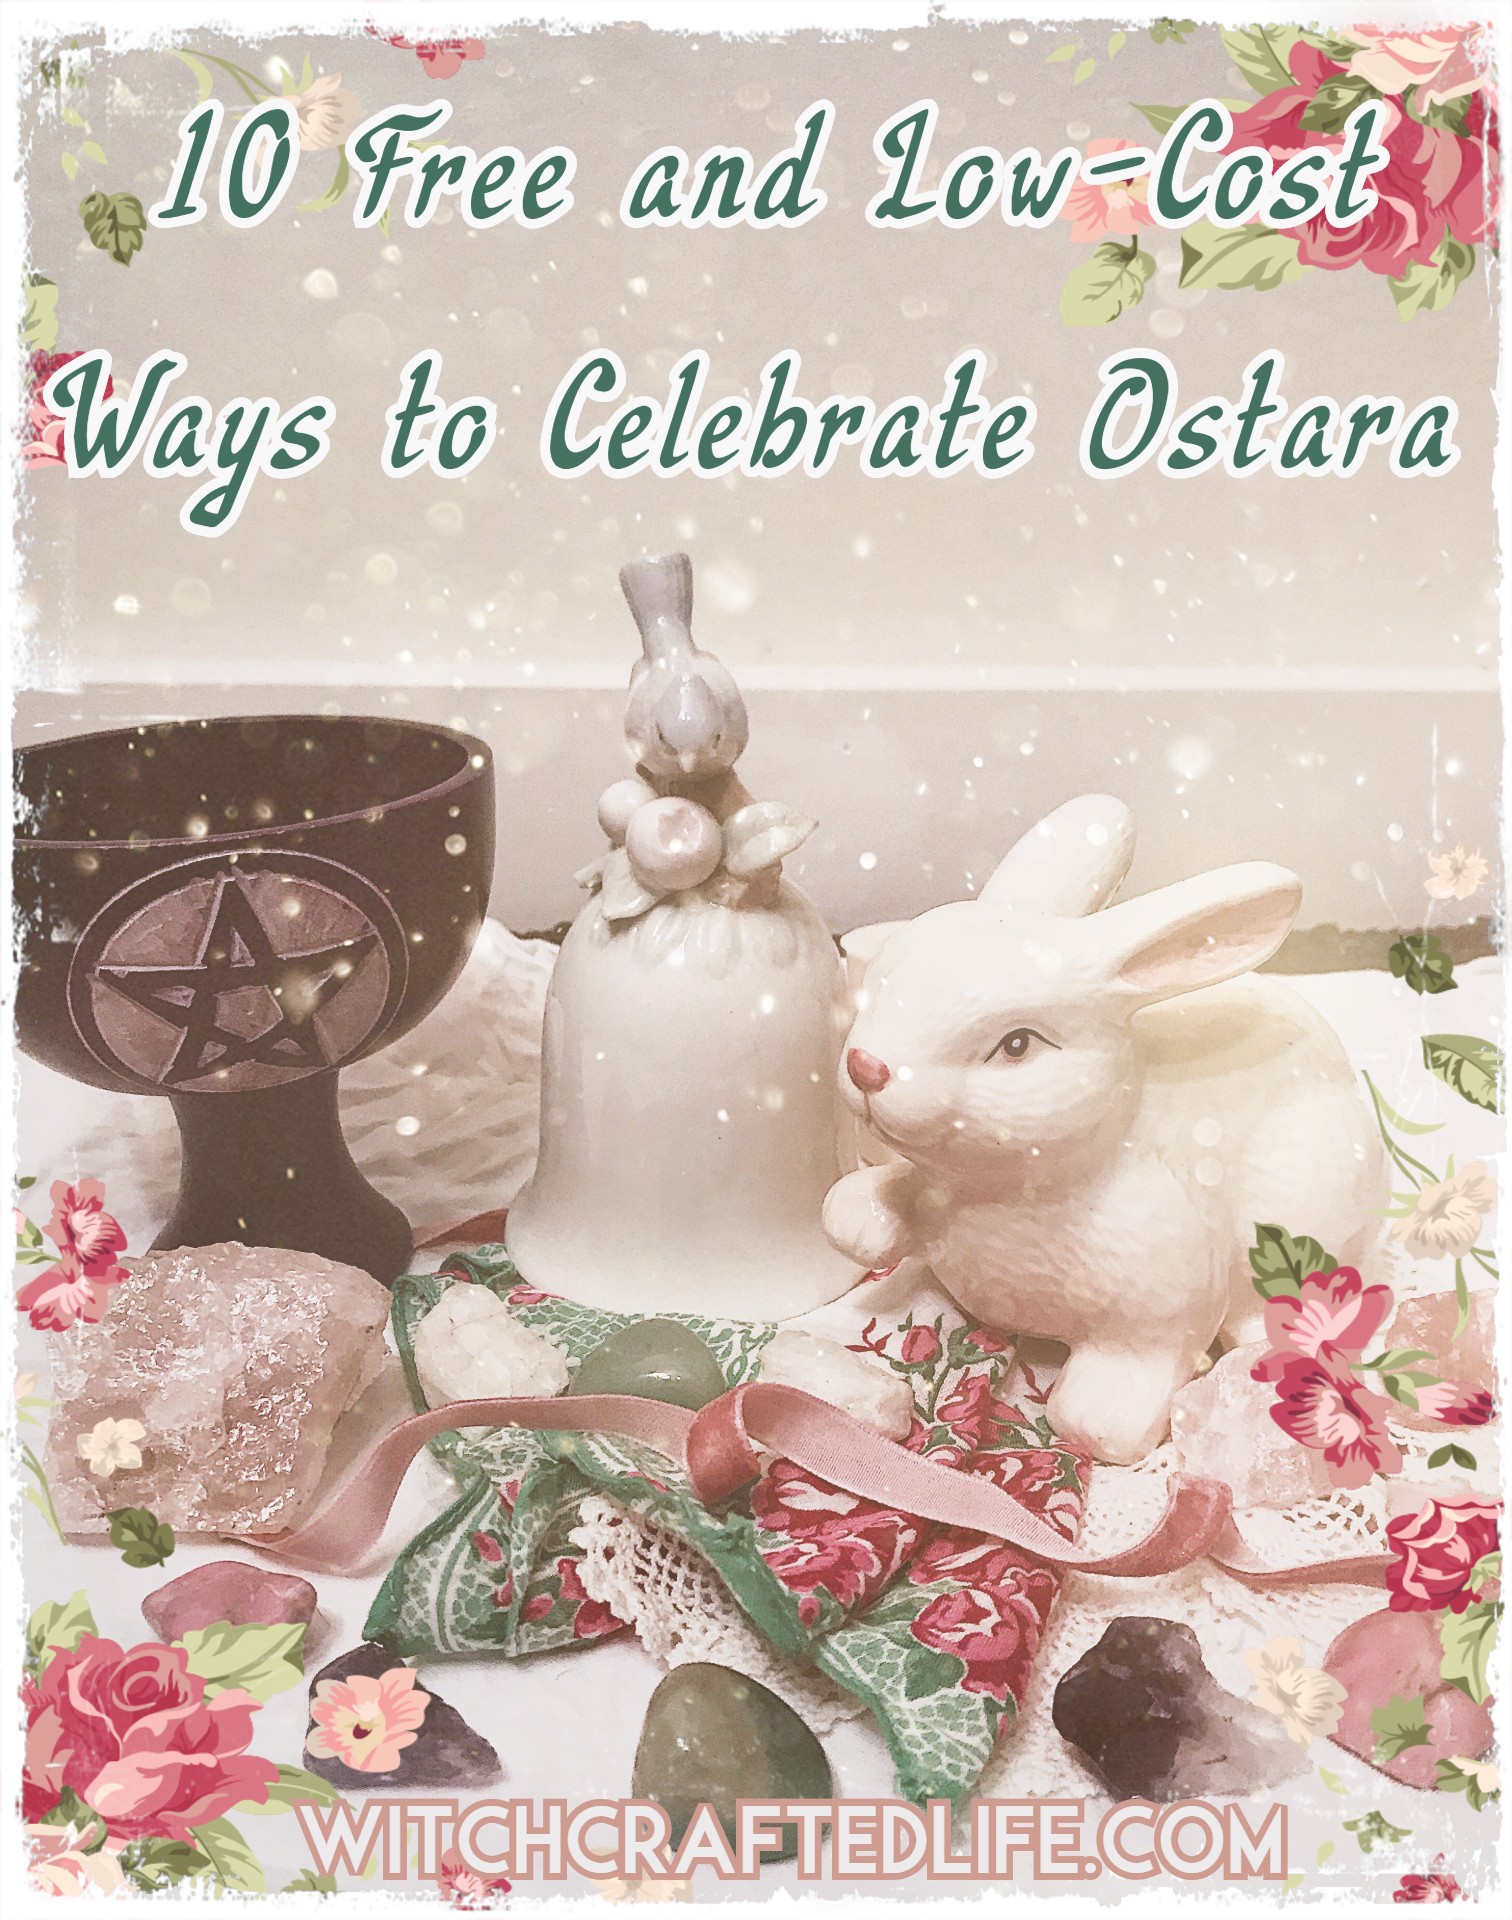 How to Celebrate Ostara